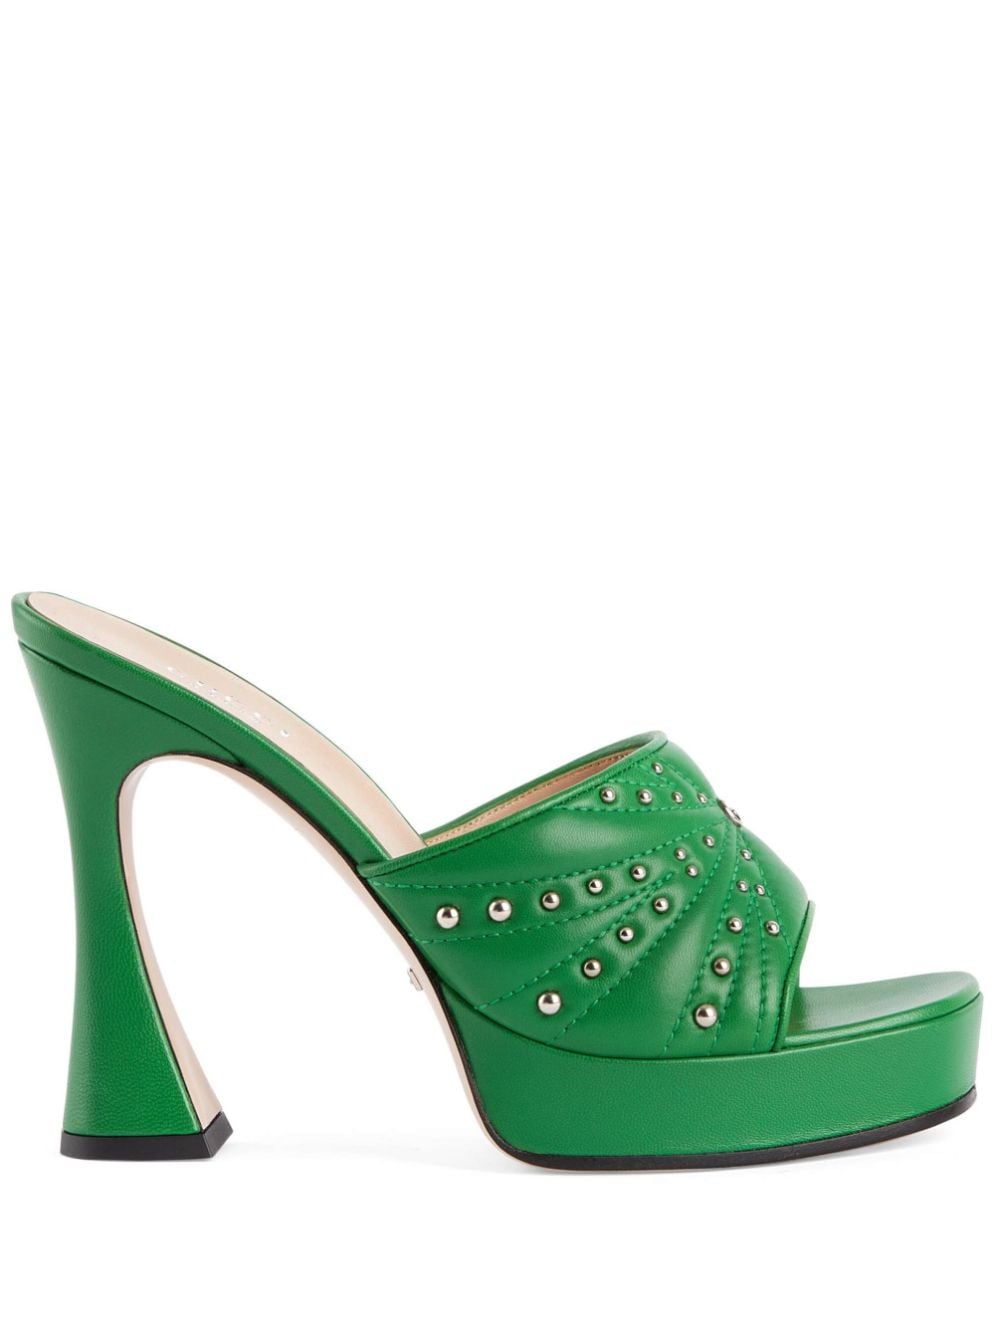 Gucci cystal embellished heeled mules - Green von Gucci